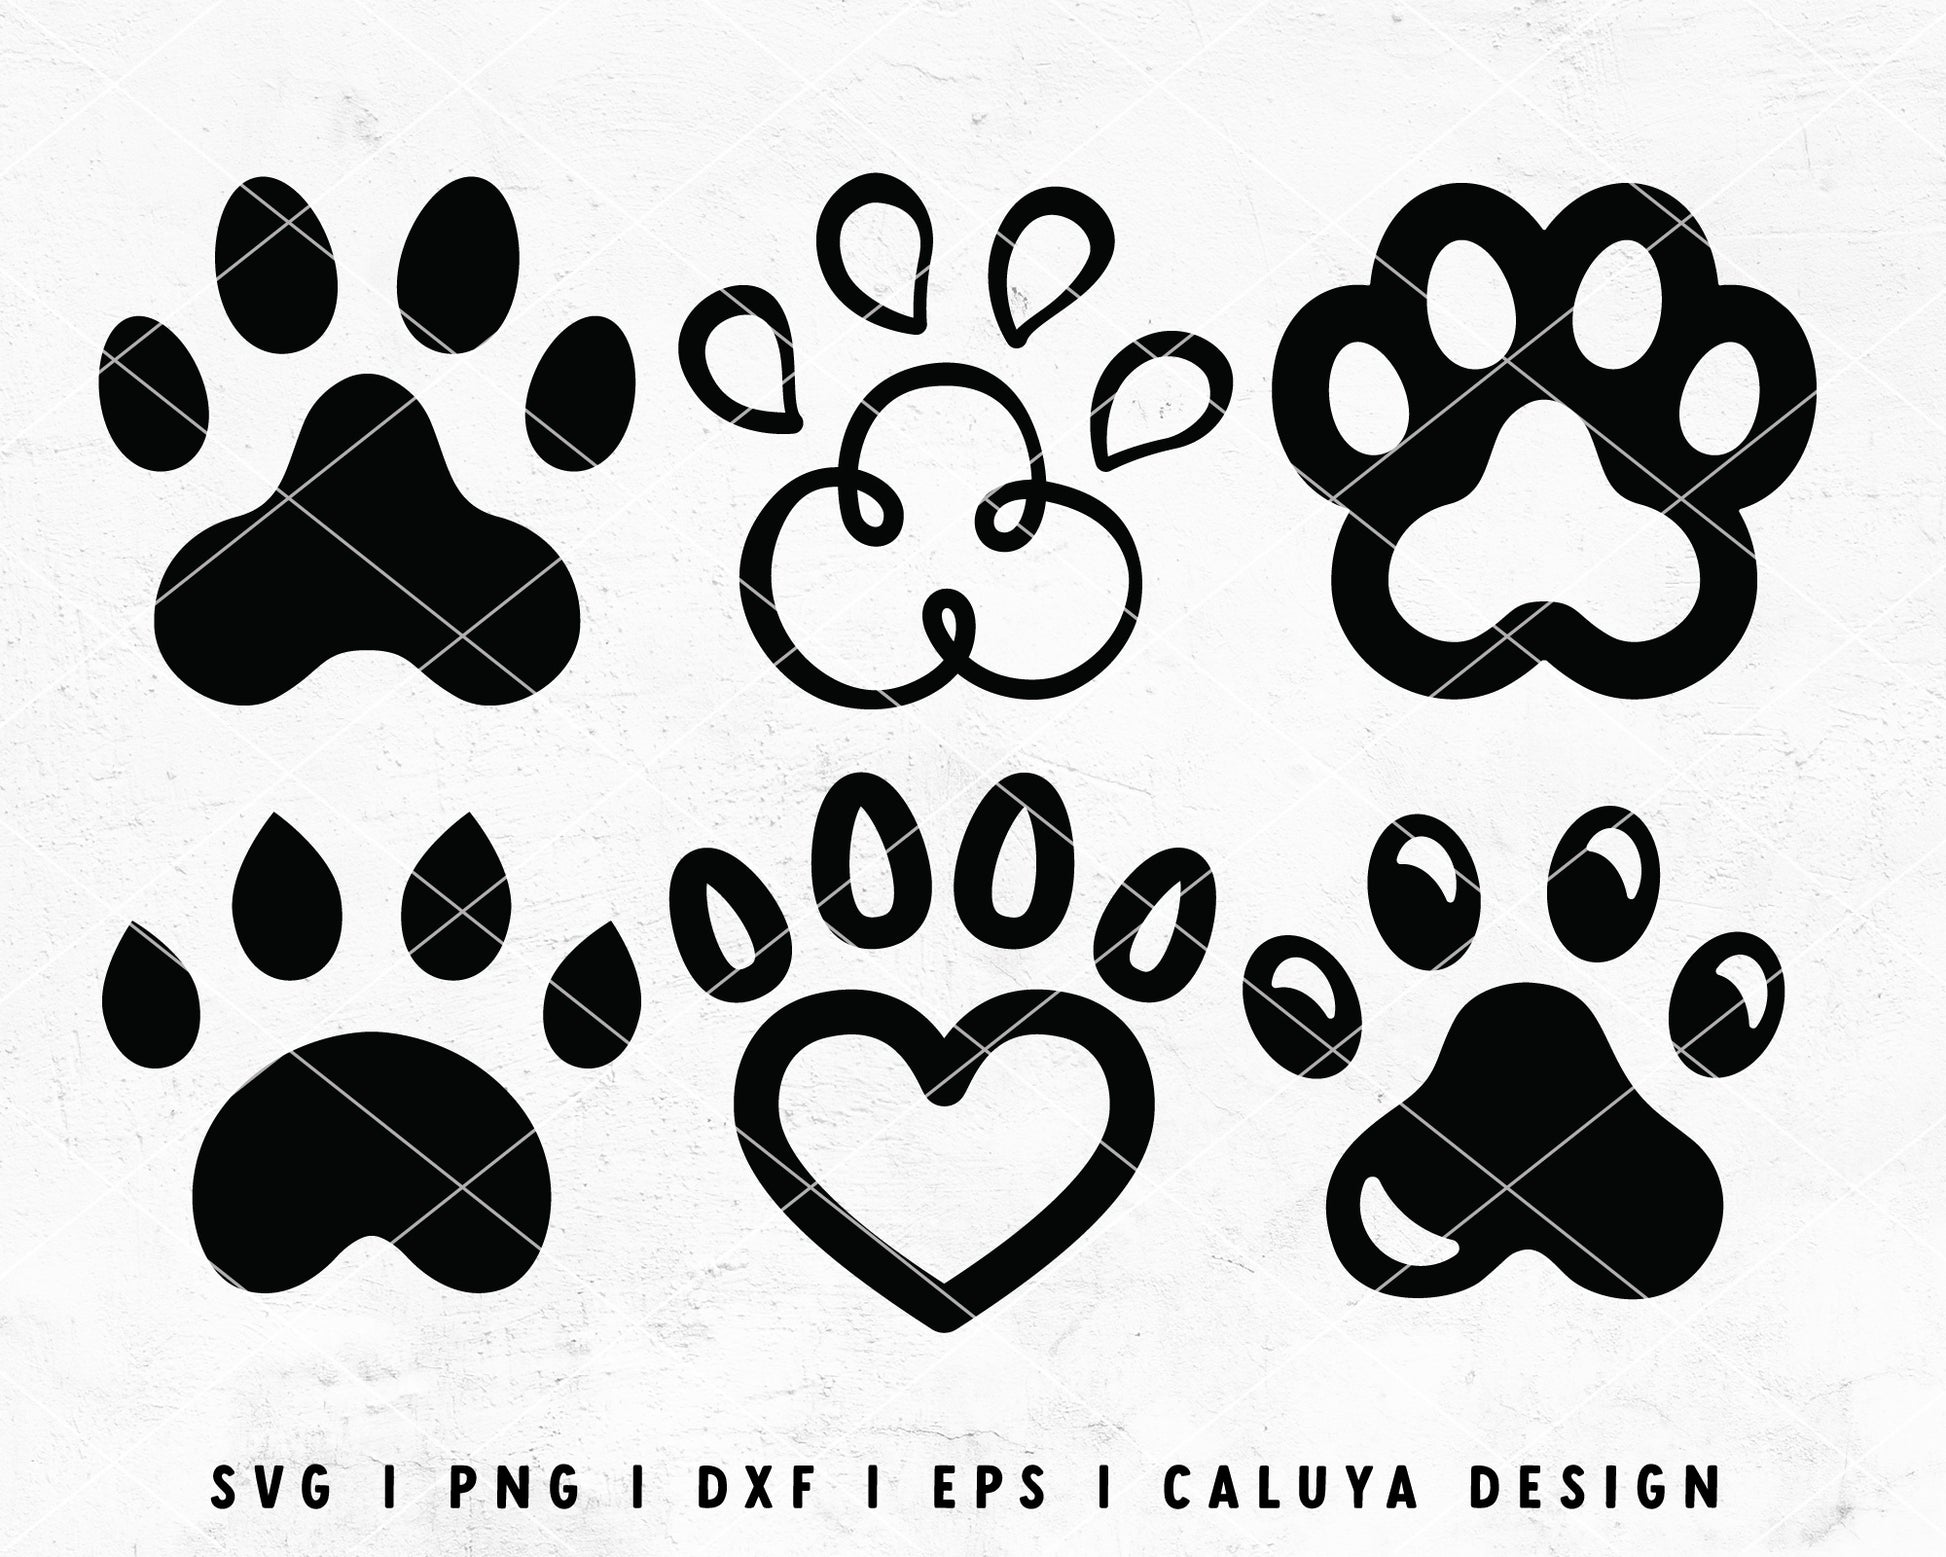 Paw Print SVG, Paw Print Cut File, Paw Print Vector, Paw Print Clipart, Paw  Print Outline Design Illustration, Cricut, Silhouette, PNG -  UK